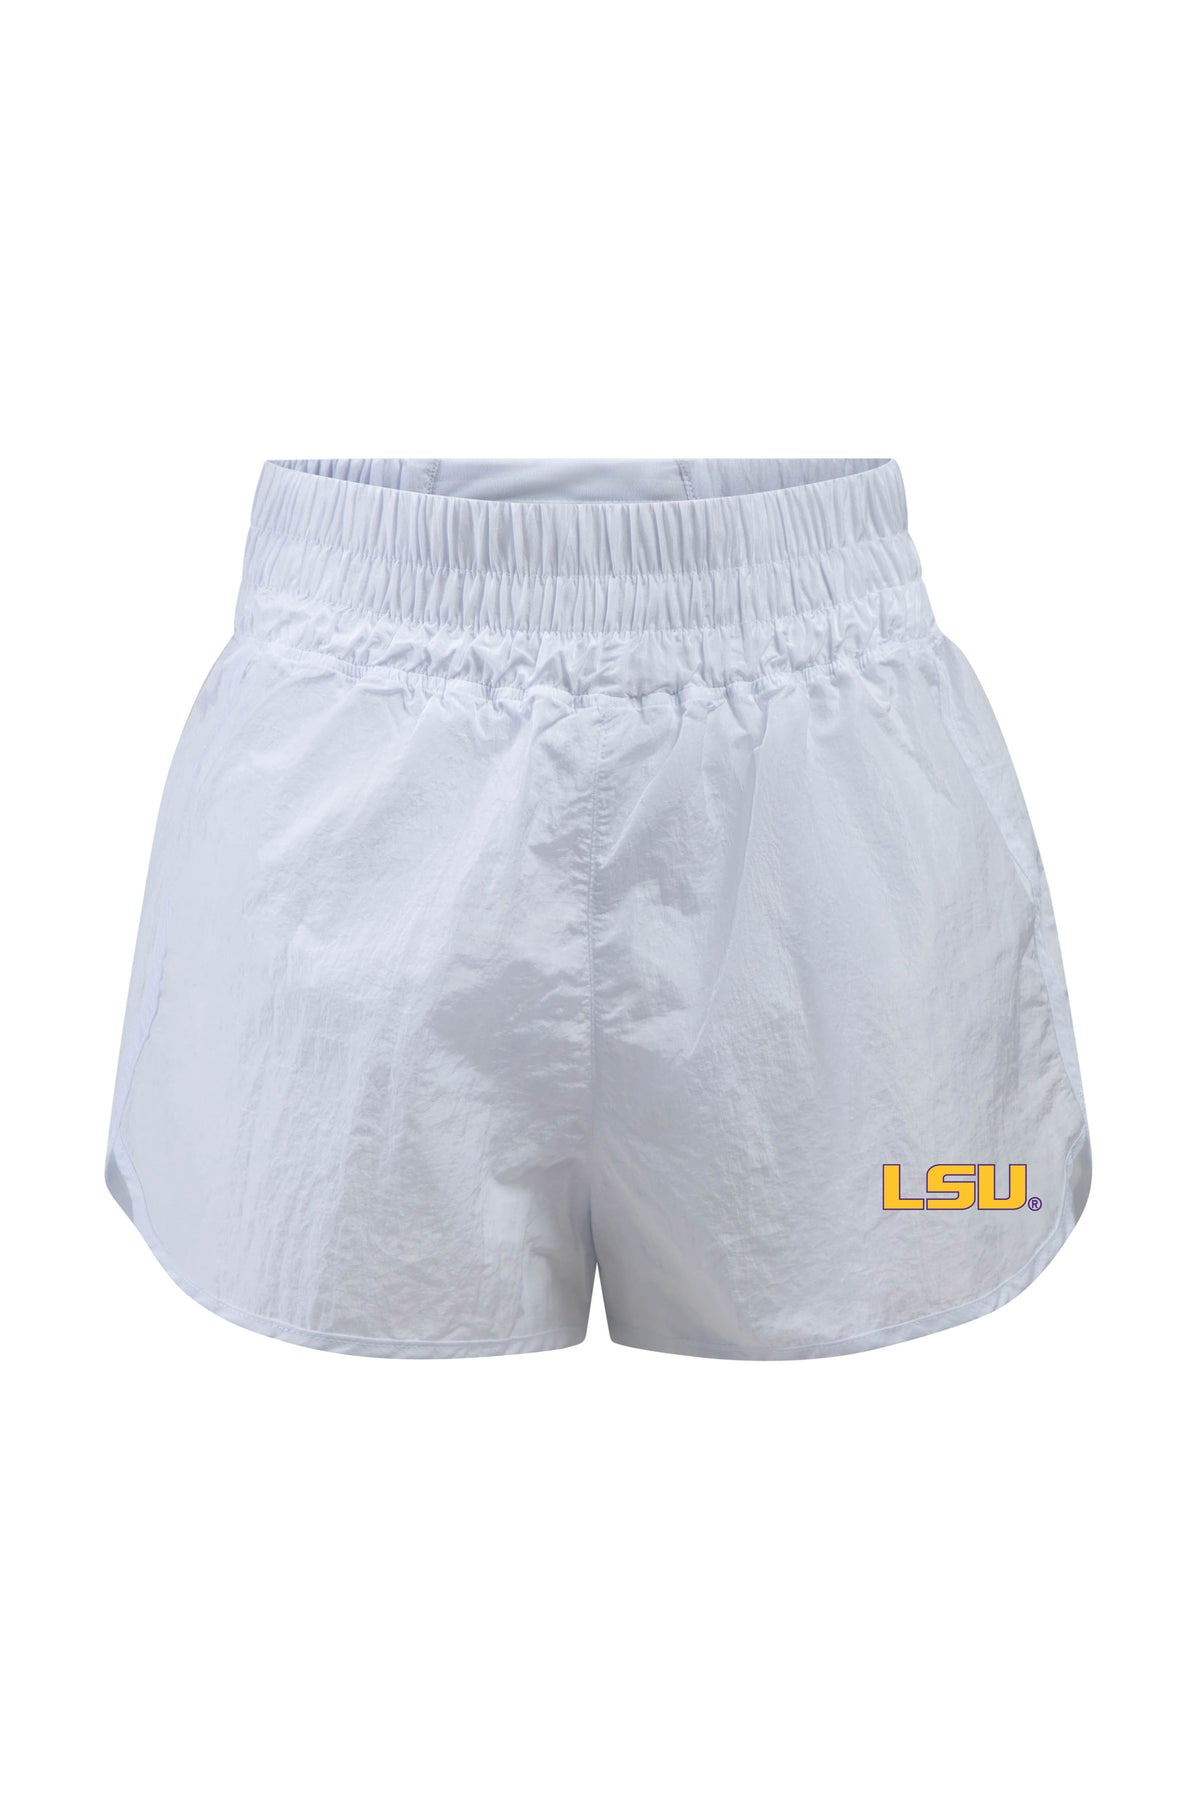 Louisiana State University Boxer Short